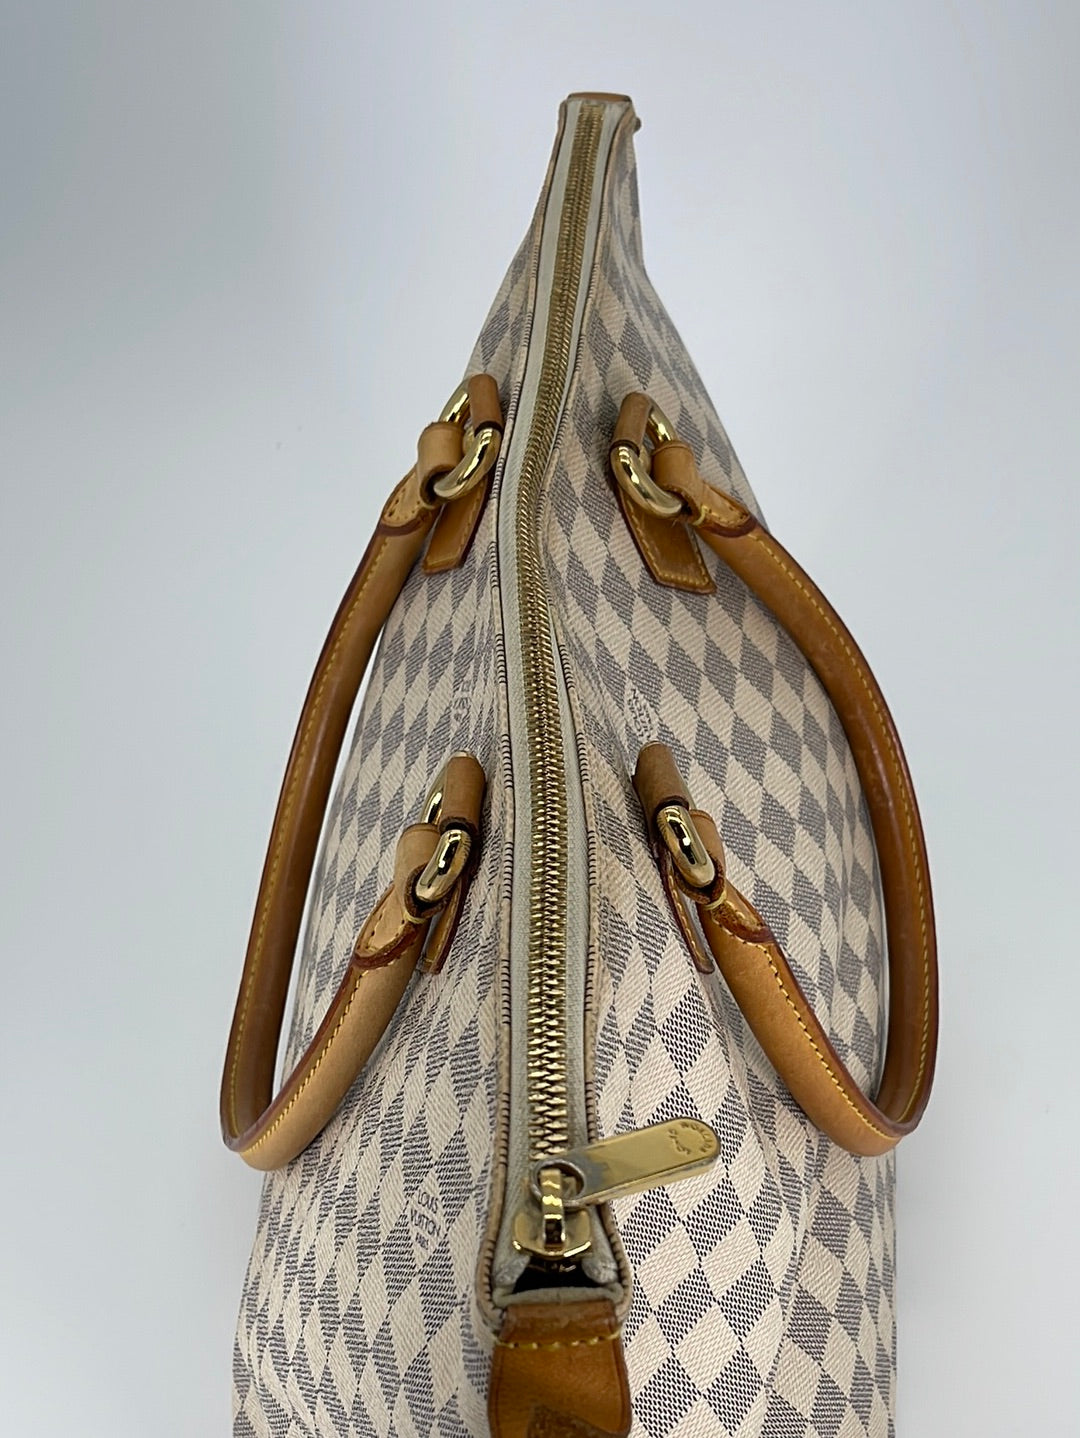 White Louis Vuitton Damier Azur Saleya GM Tote Bag – Designer Revival